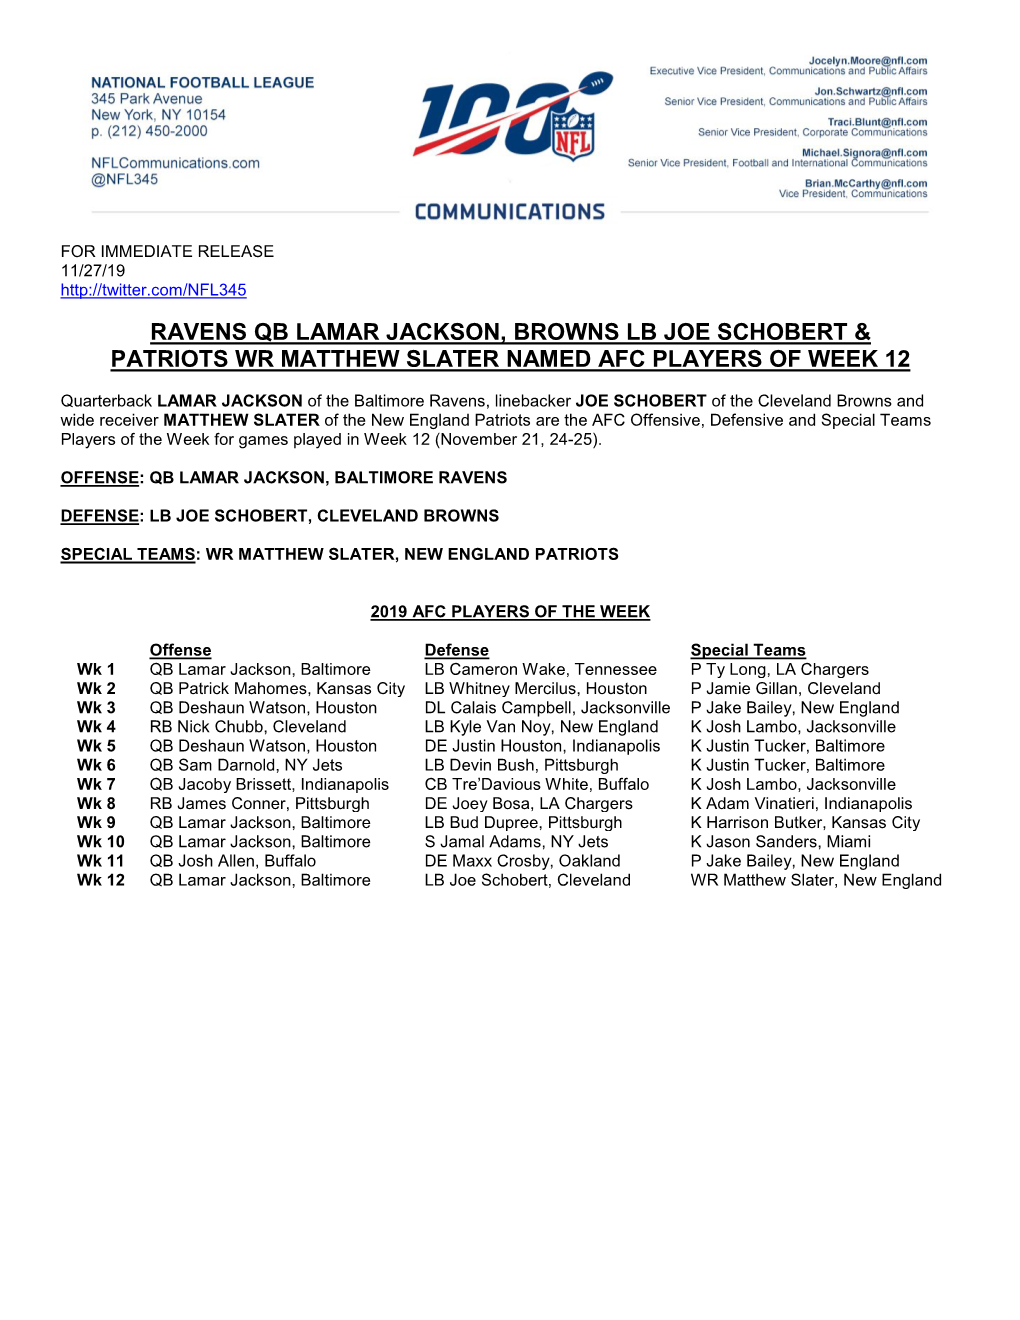 Ravens Qb Lamar Jackson, Browns Lb Joe Schobert & Patriots Wr Matthew Slater Named Afc Players of Week 12